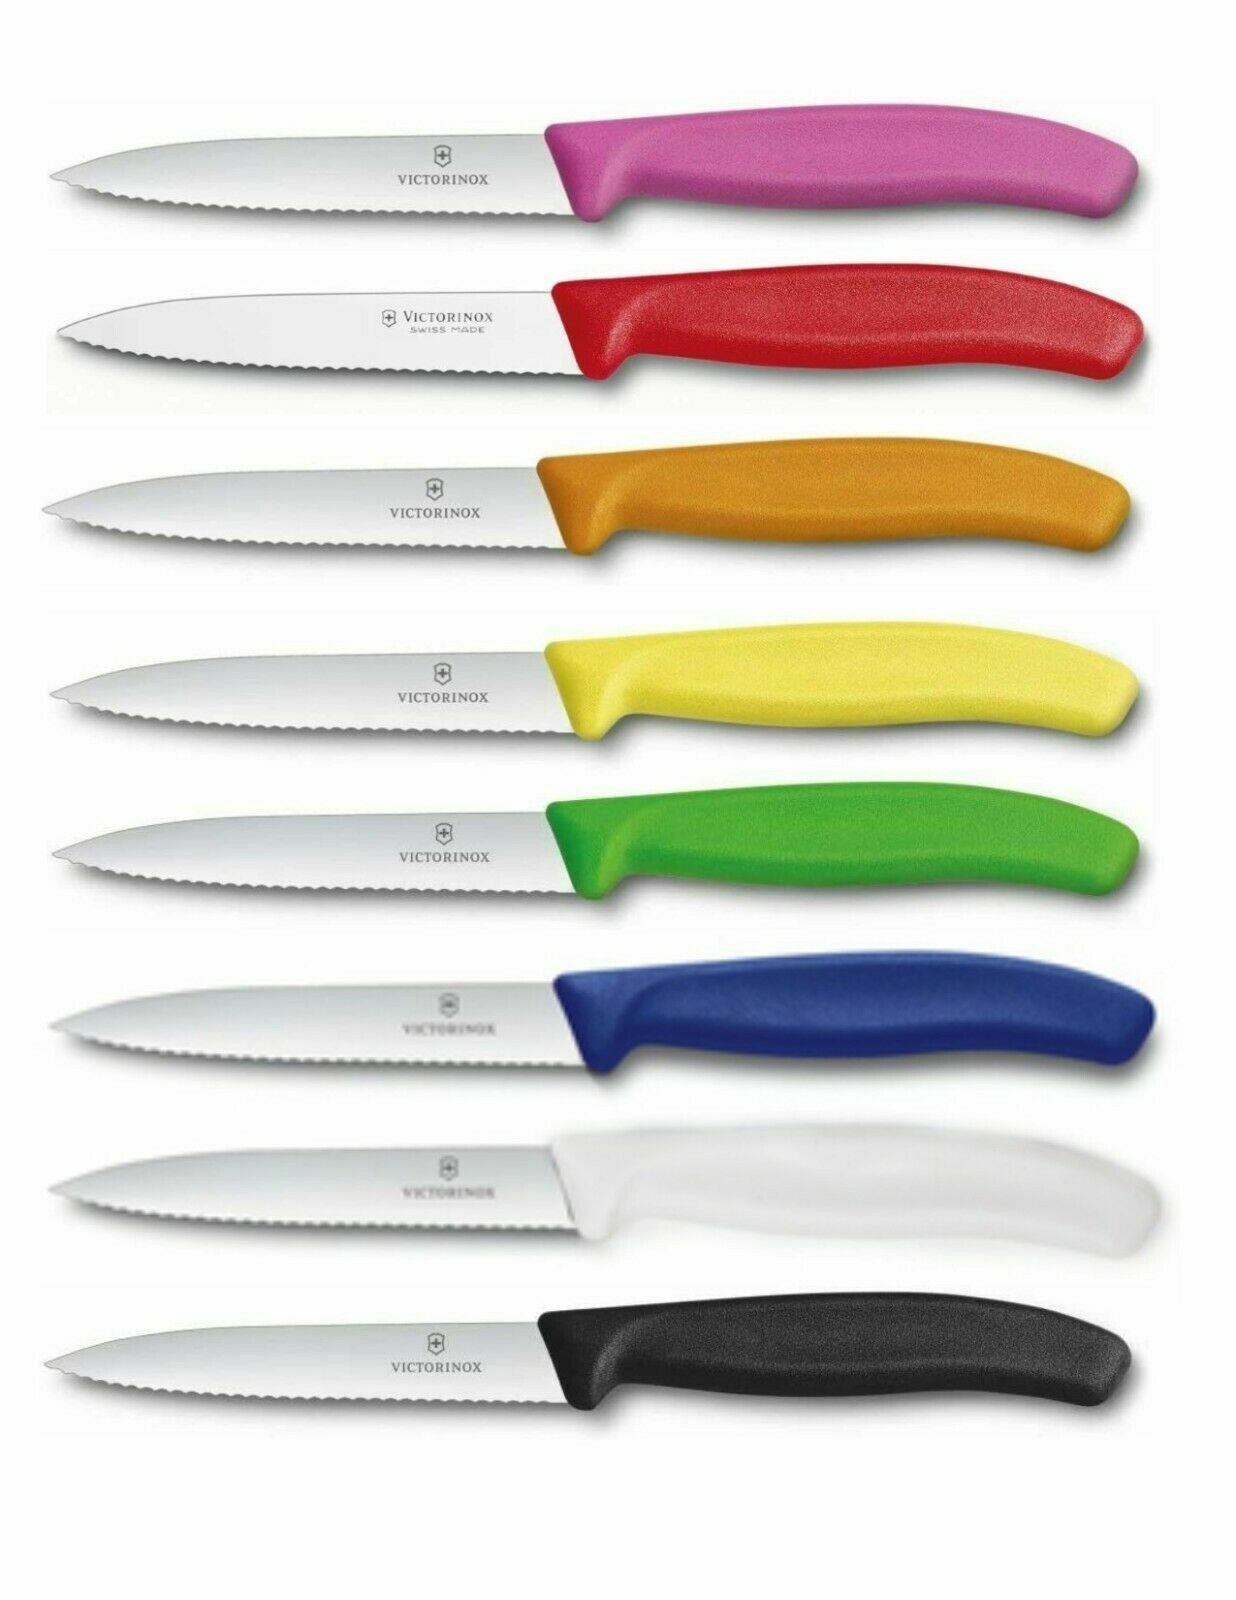 VICTORINOX Swiss Made 4 Inch Blade Kitchen Paring Knife - Se